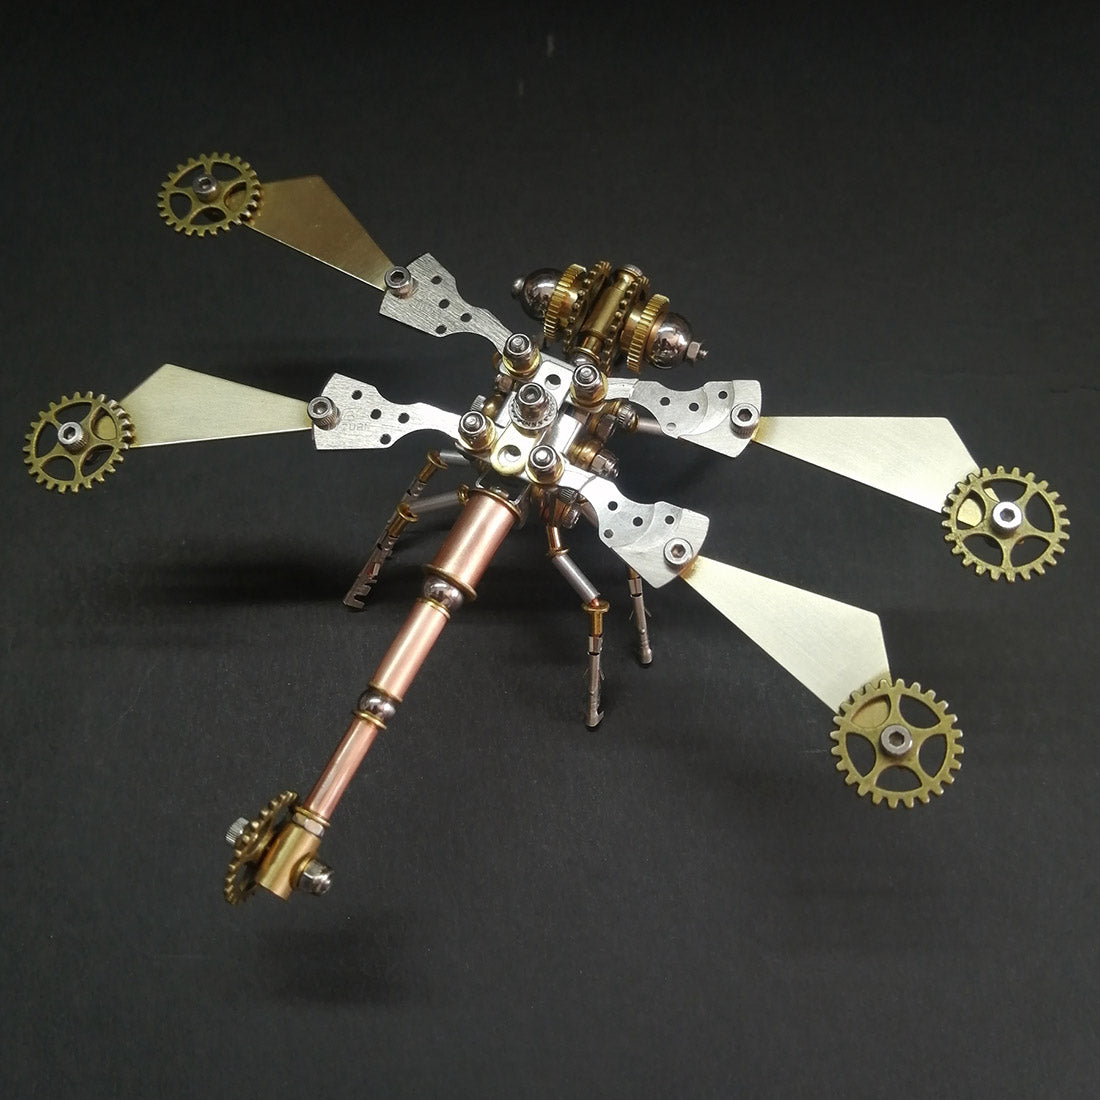 3D Metal Steampunk Puzzle Dragonfly DIY Assembled Model 150+PCS